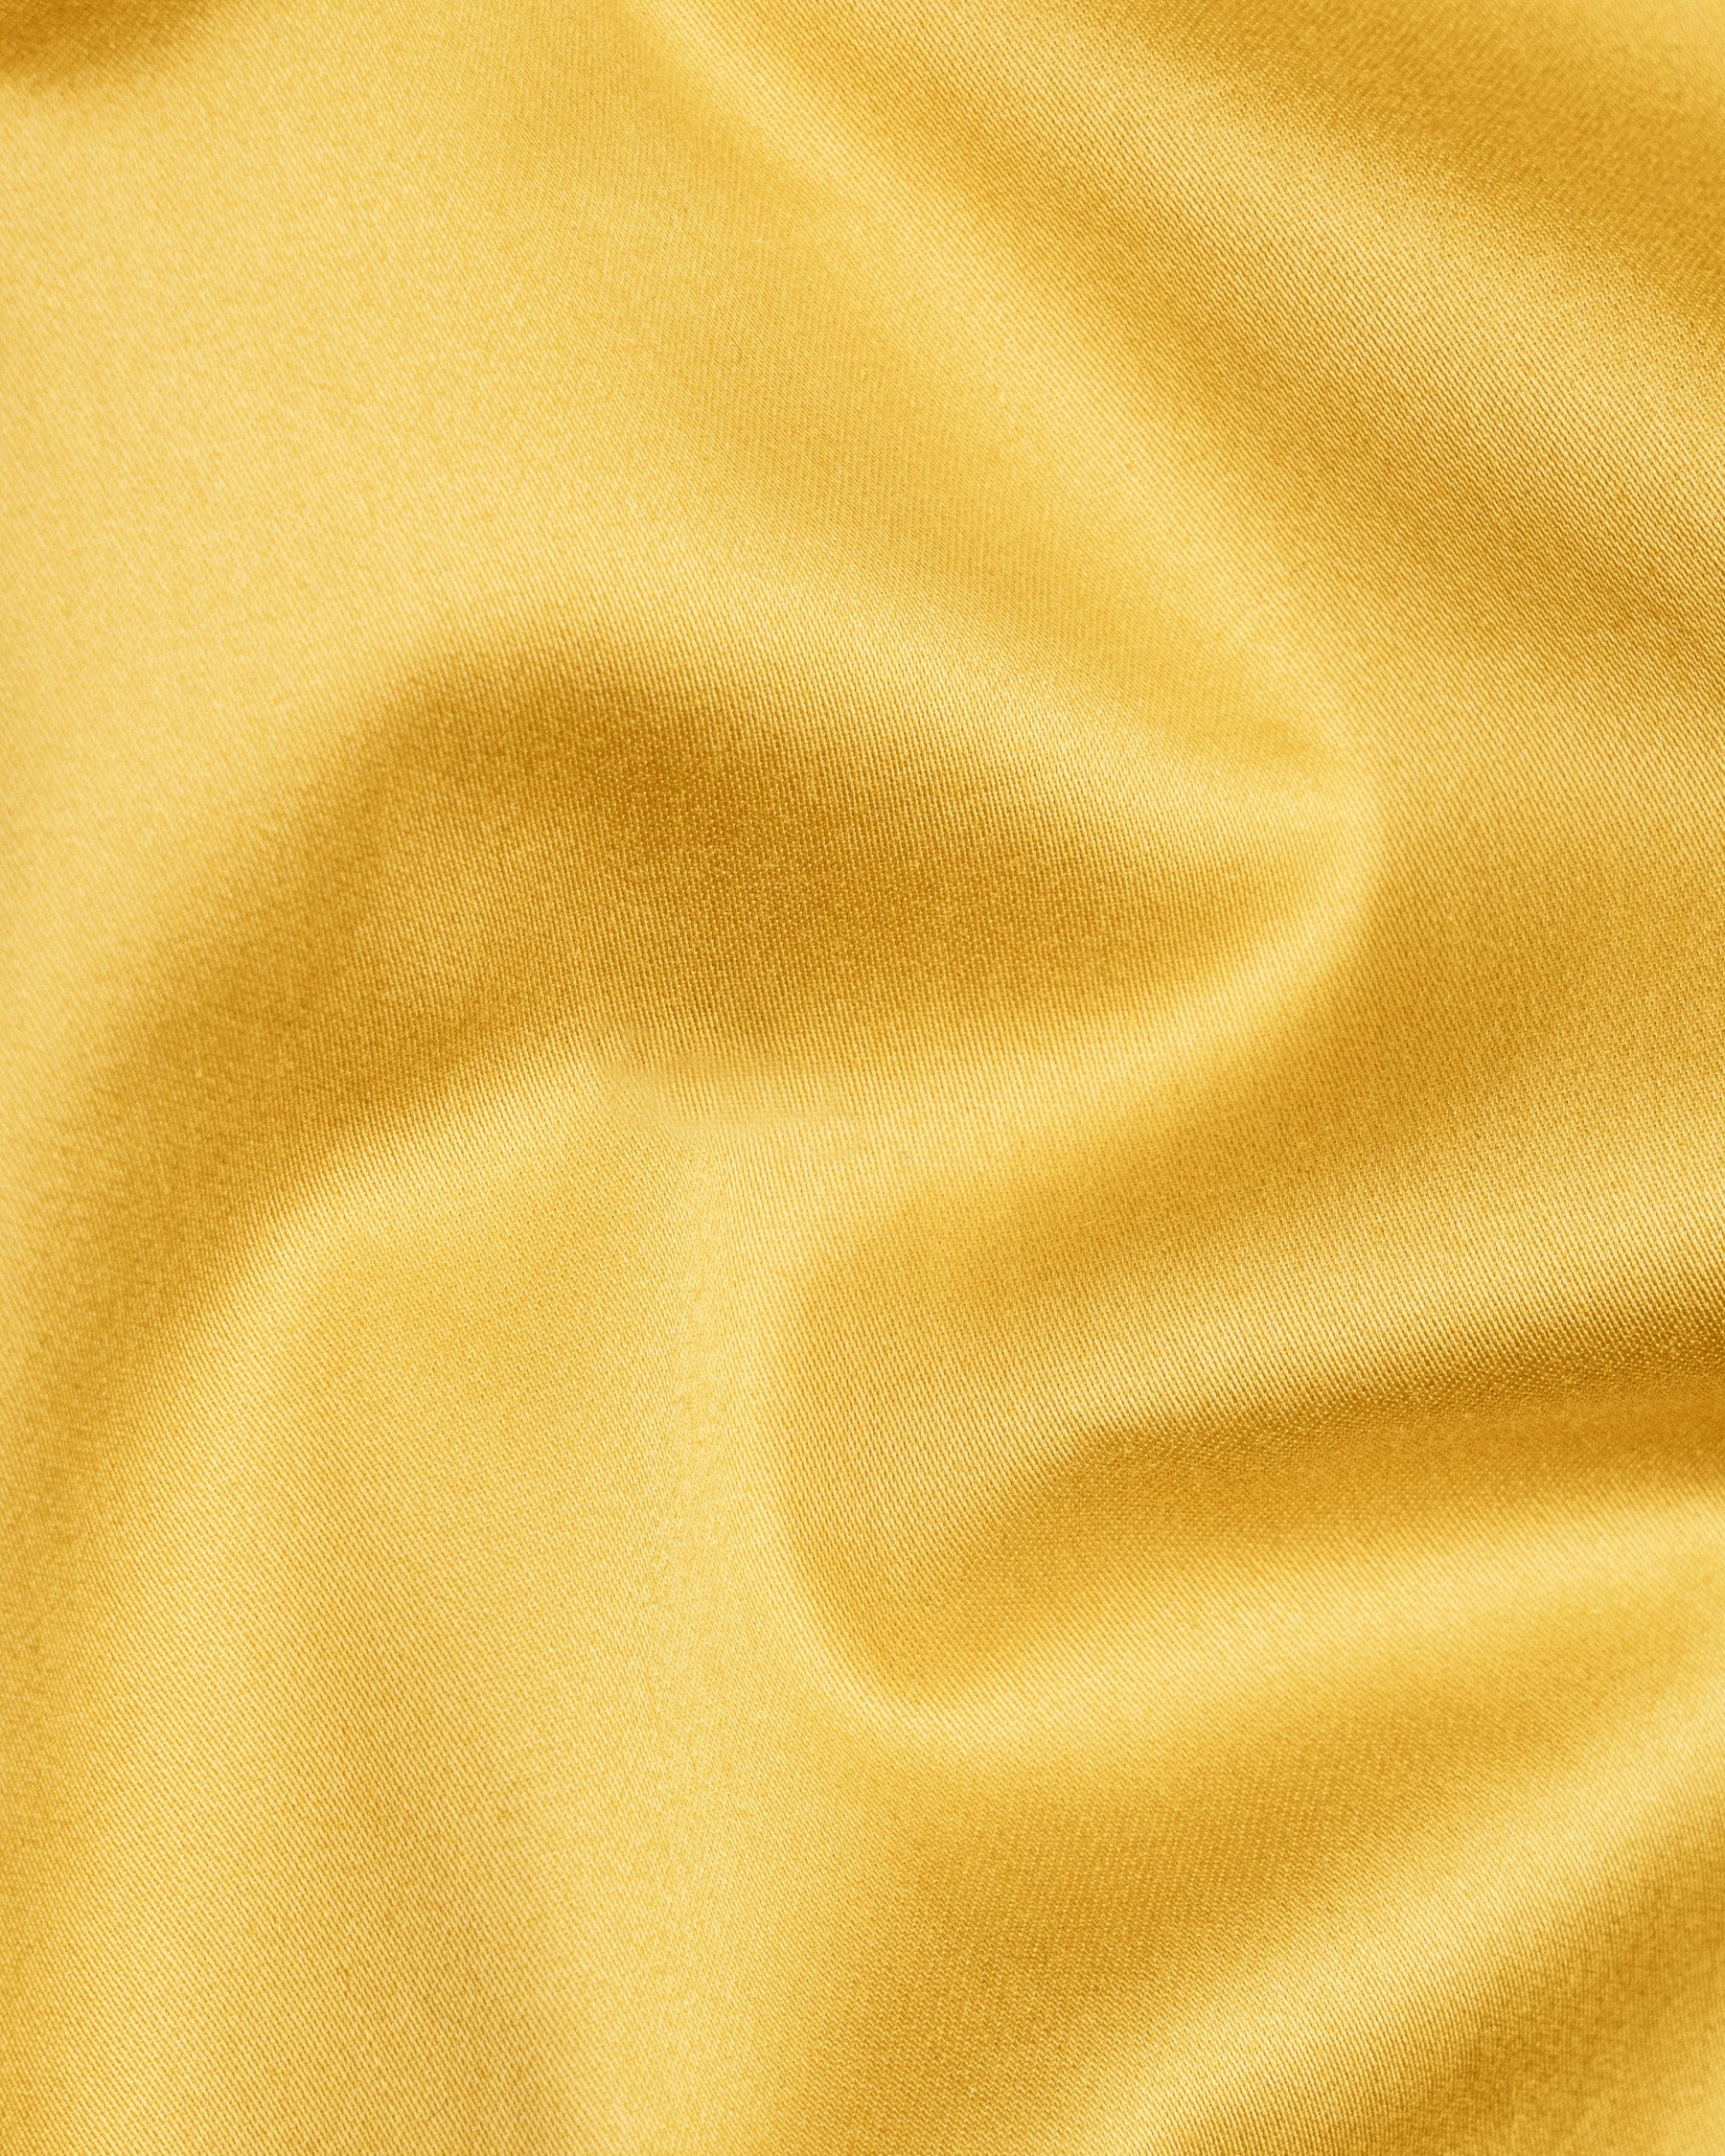 Ronchi Yellow Premium Satin Shirt 5307-BLK-38, 5307-BLK-H-38, 5307-BLK-39, 5307-BLK-H-39, 5307-BLK-40, 5307-BLK-H-40, 5307-BLK-42, 5307-BLK-H-42, 5307-BLK-44, 5307-BLK-H-44, 5307-BLK-46, 5307-BLK-H-46, 5307-BLK-48, 5307-BLK-H-48, 5307-BLK-50, 5307-BLK-H-50, 5307-BLK-52, 5307-BLK-H-52